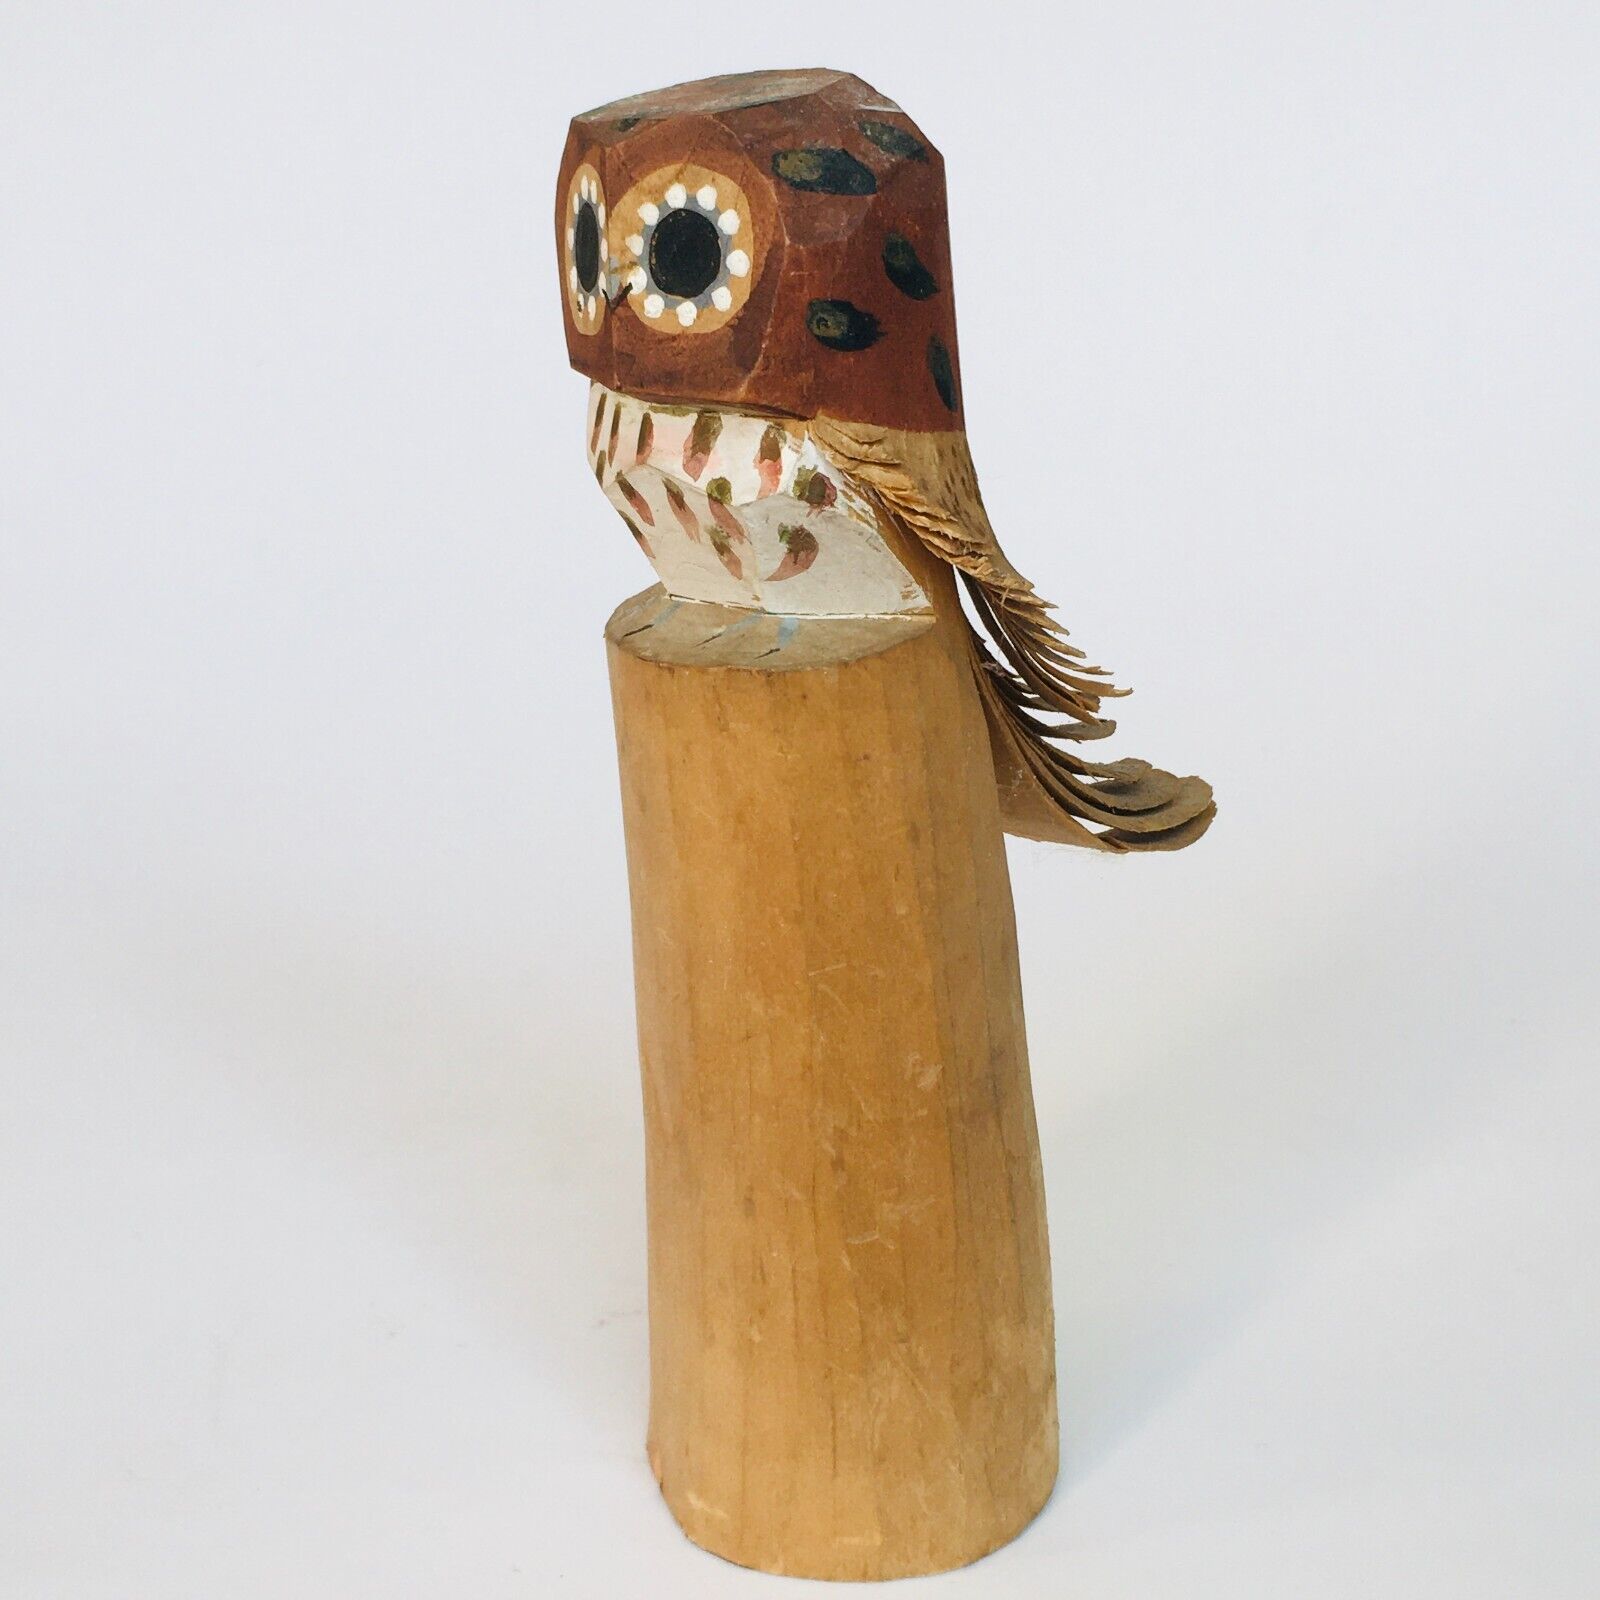 Carved Wood Vintage Perched Owl Figurine 6\